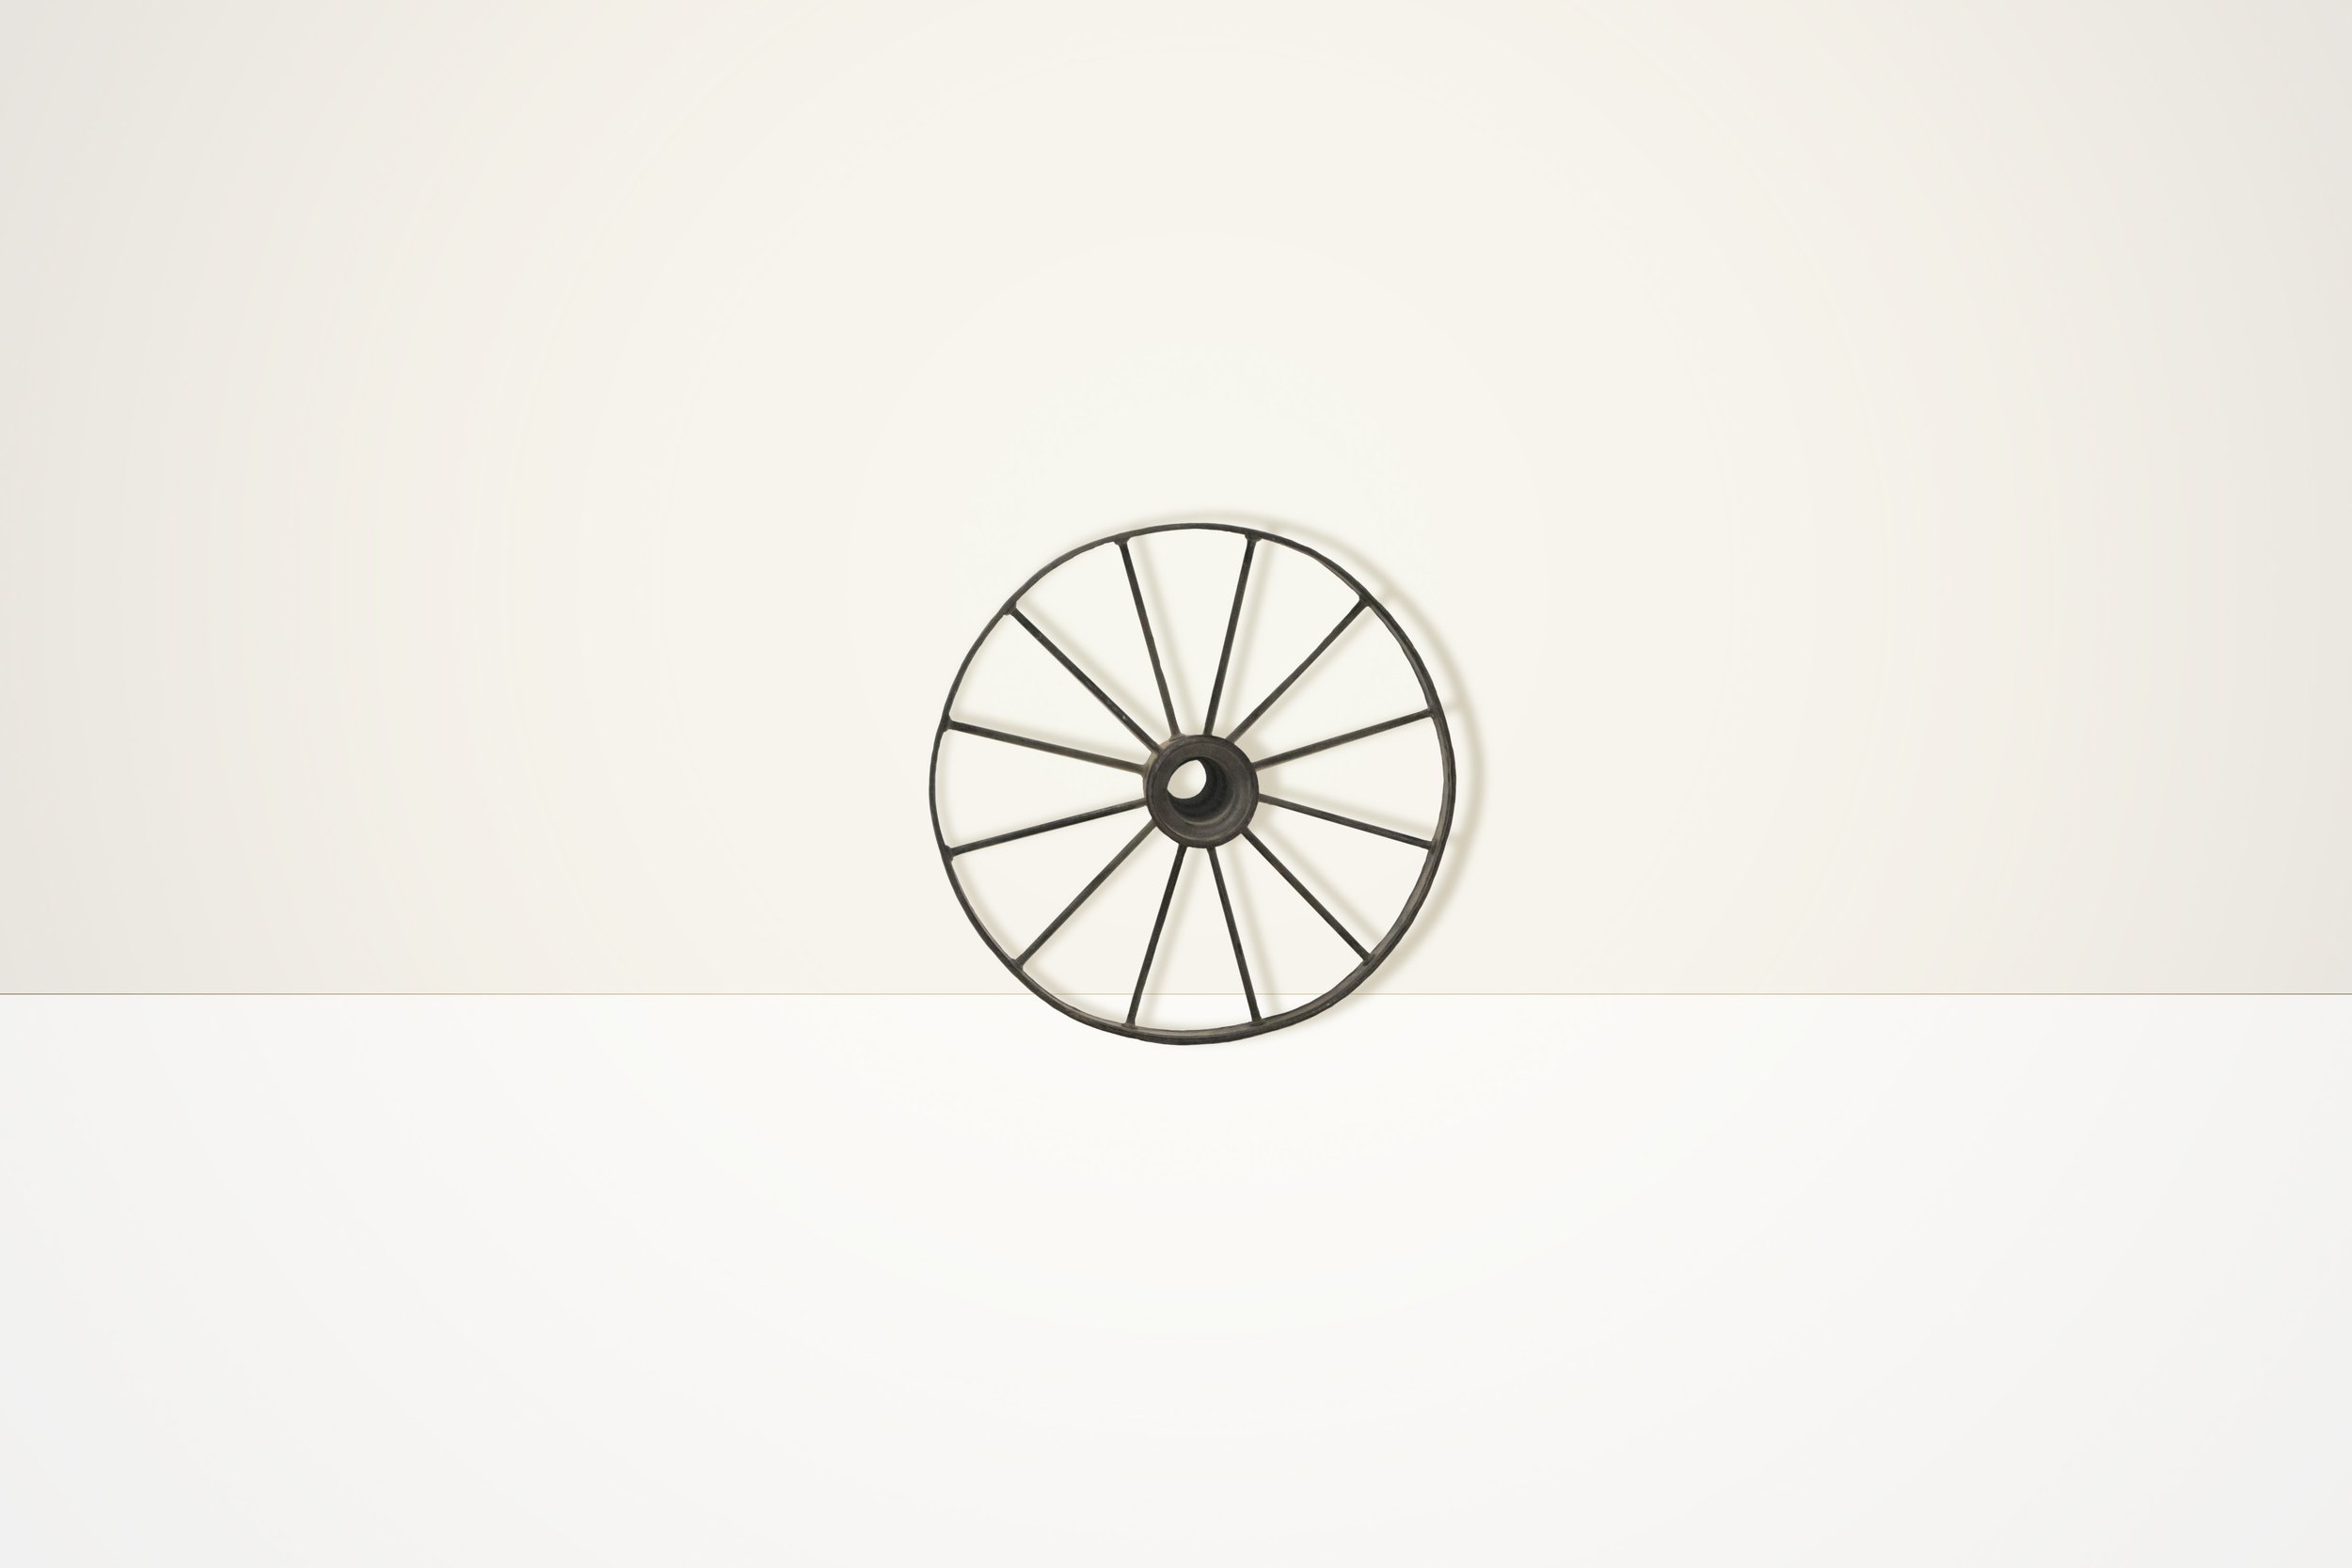 The Wagon Wheel